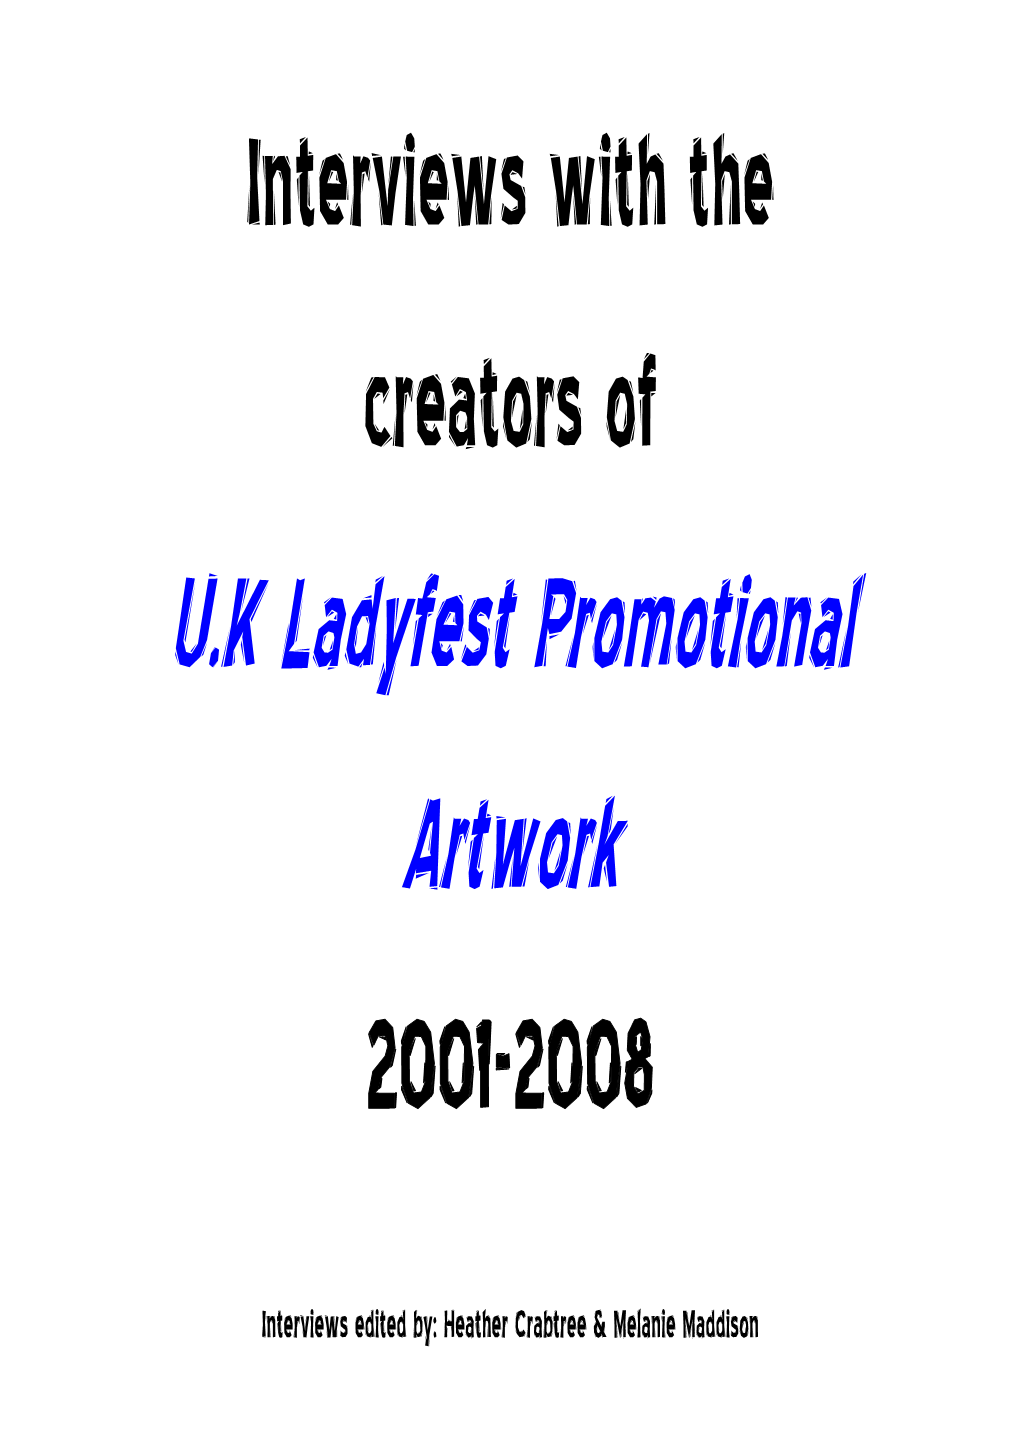 U.K Ladyfest Promotional Artwork